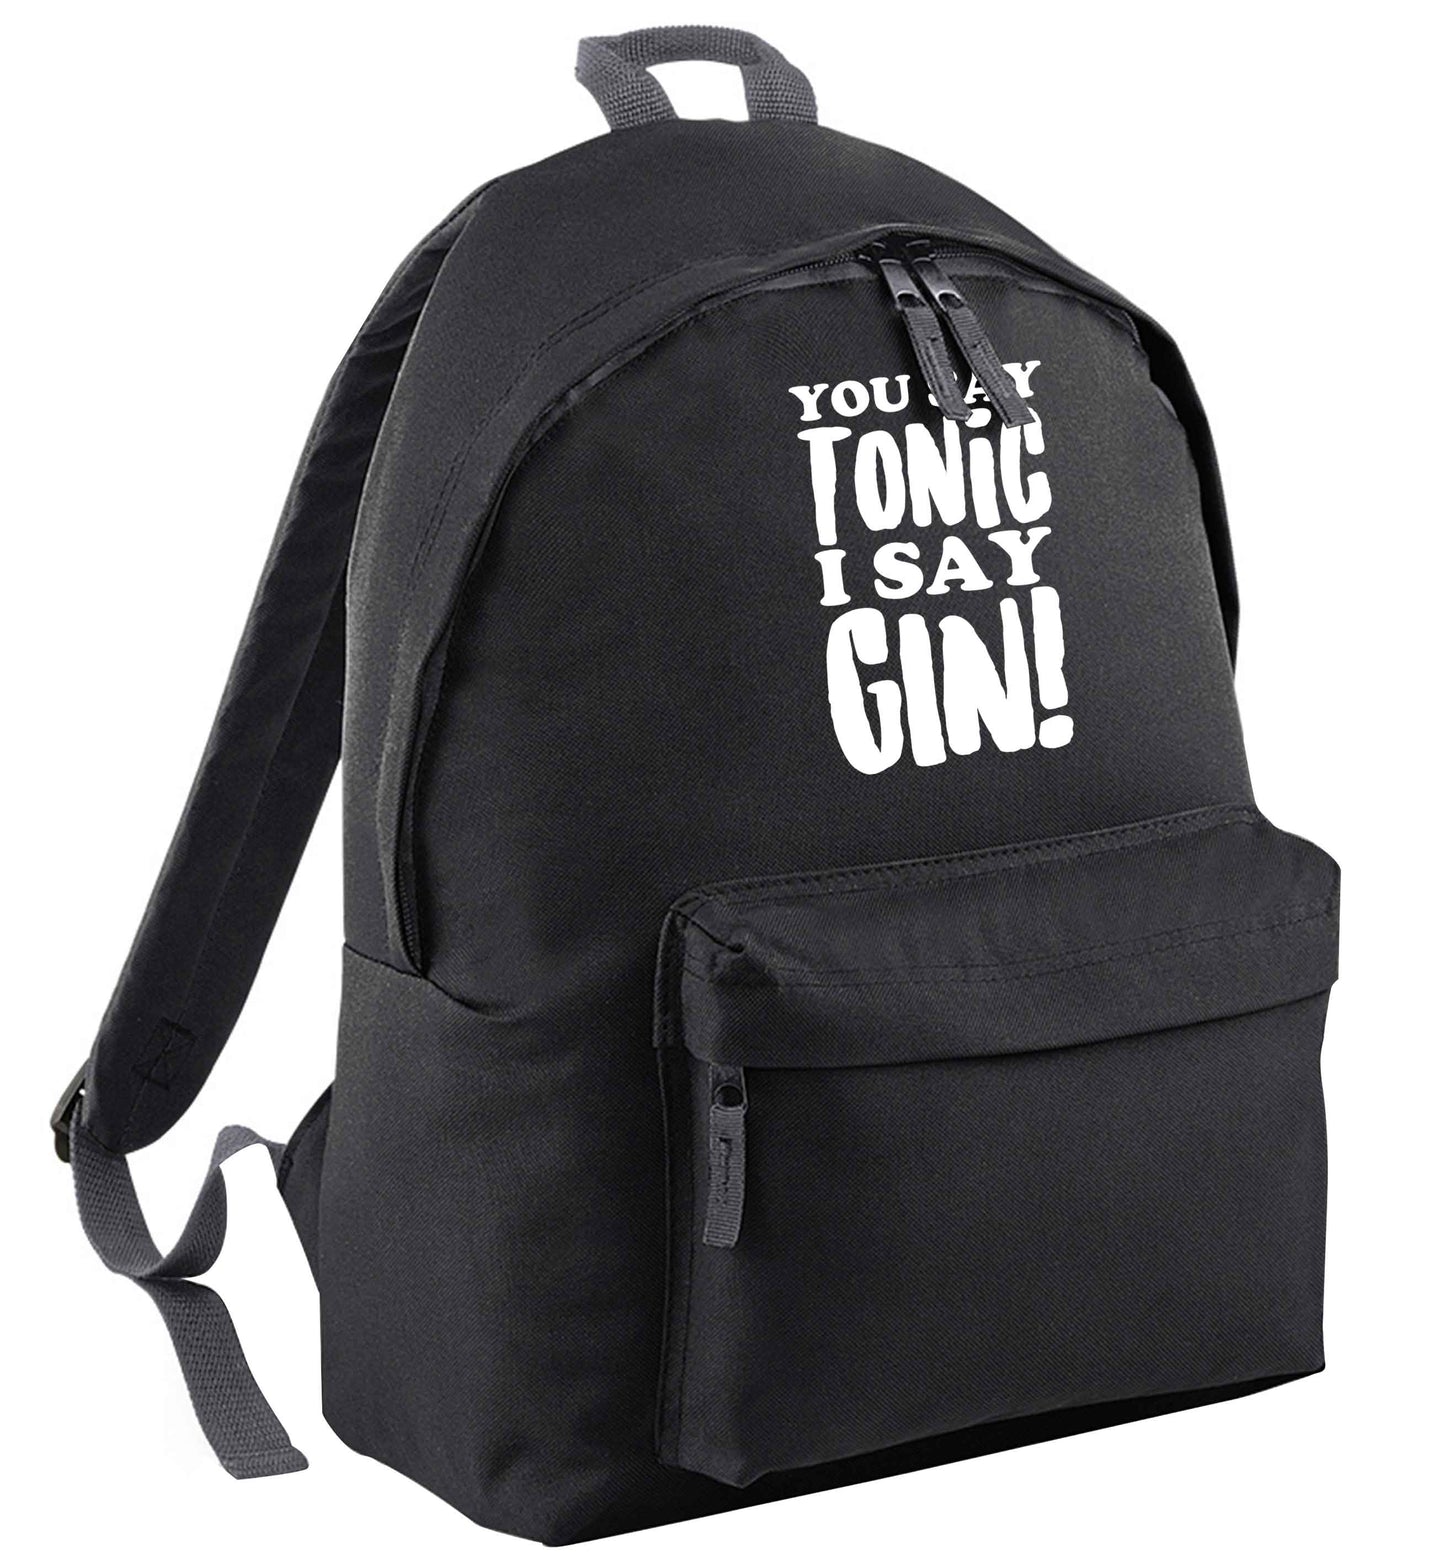 You say tonic I say gin black adults backpack